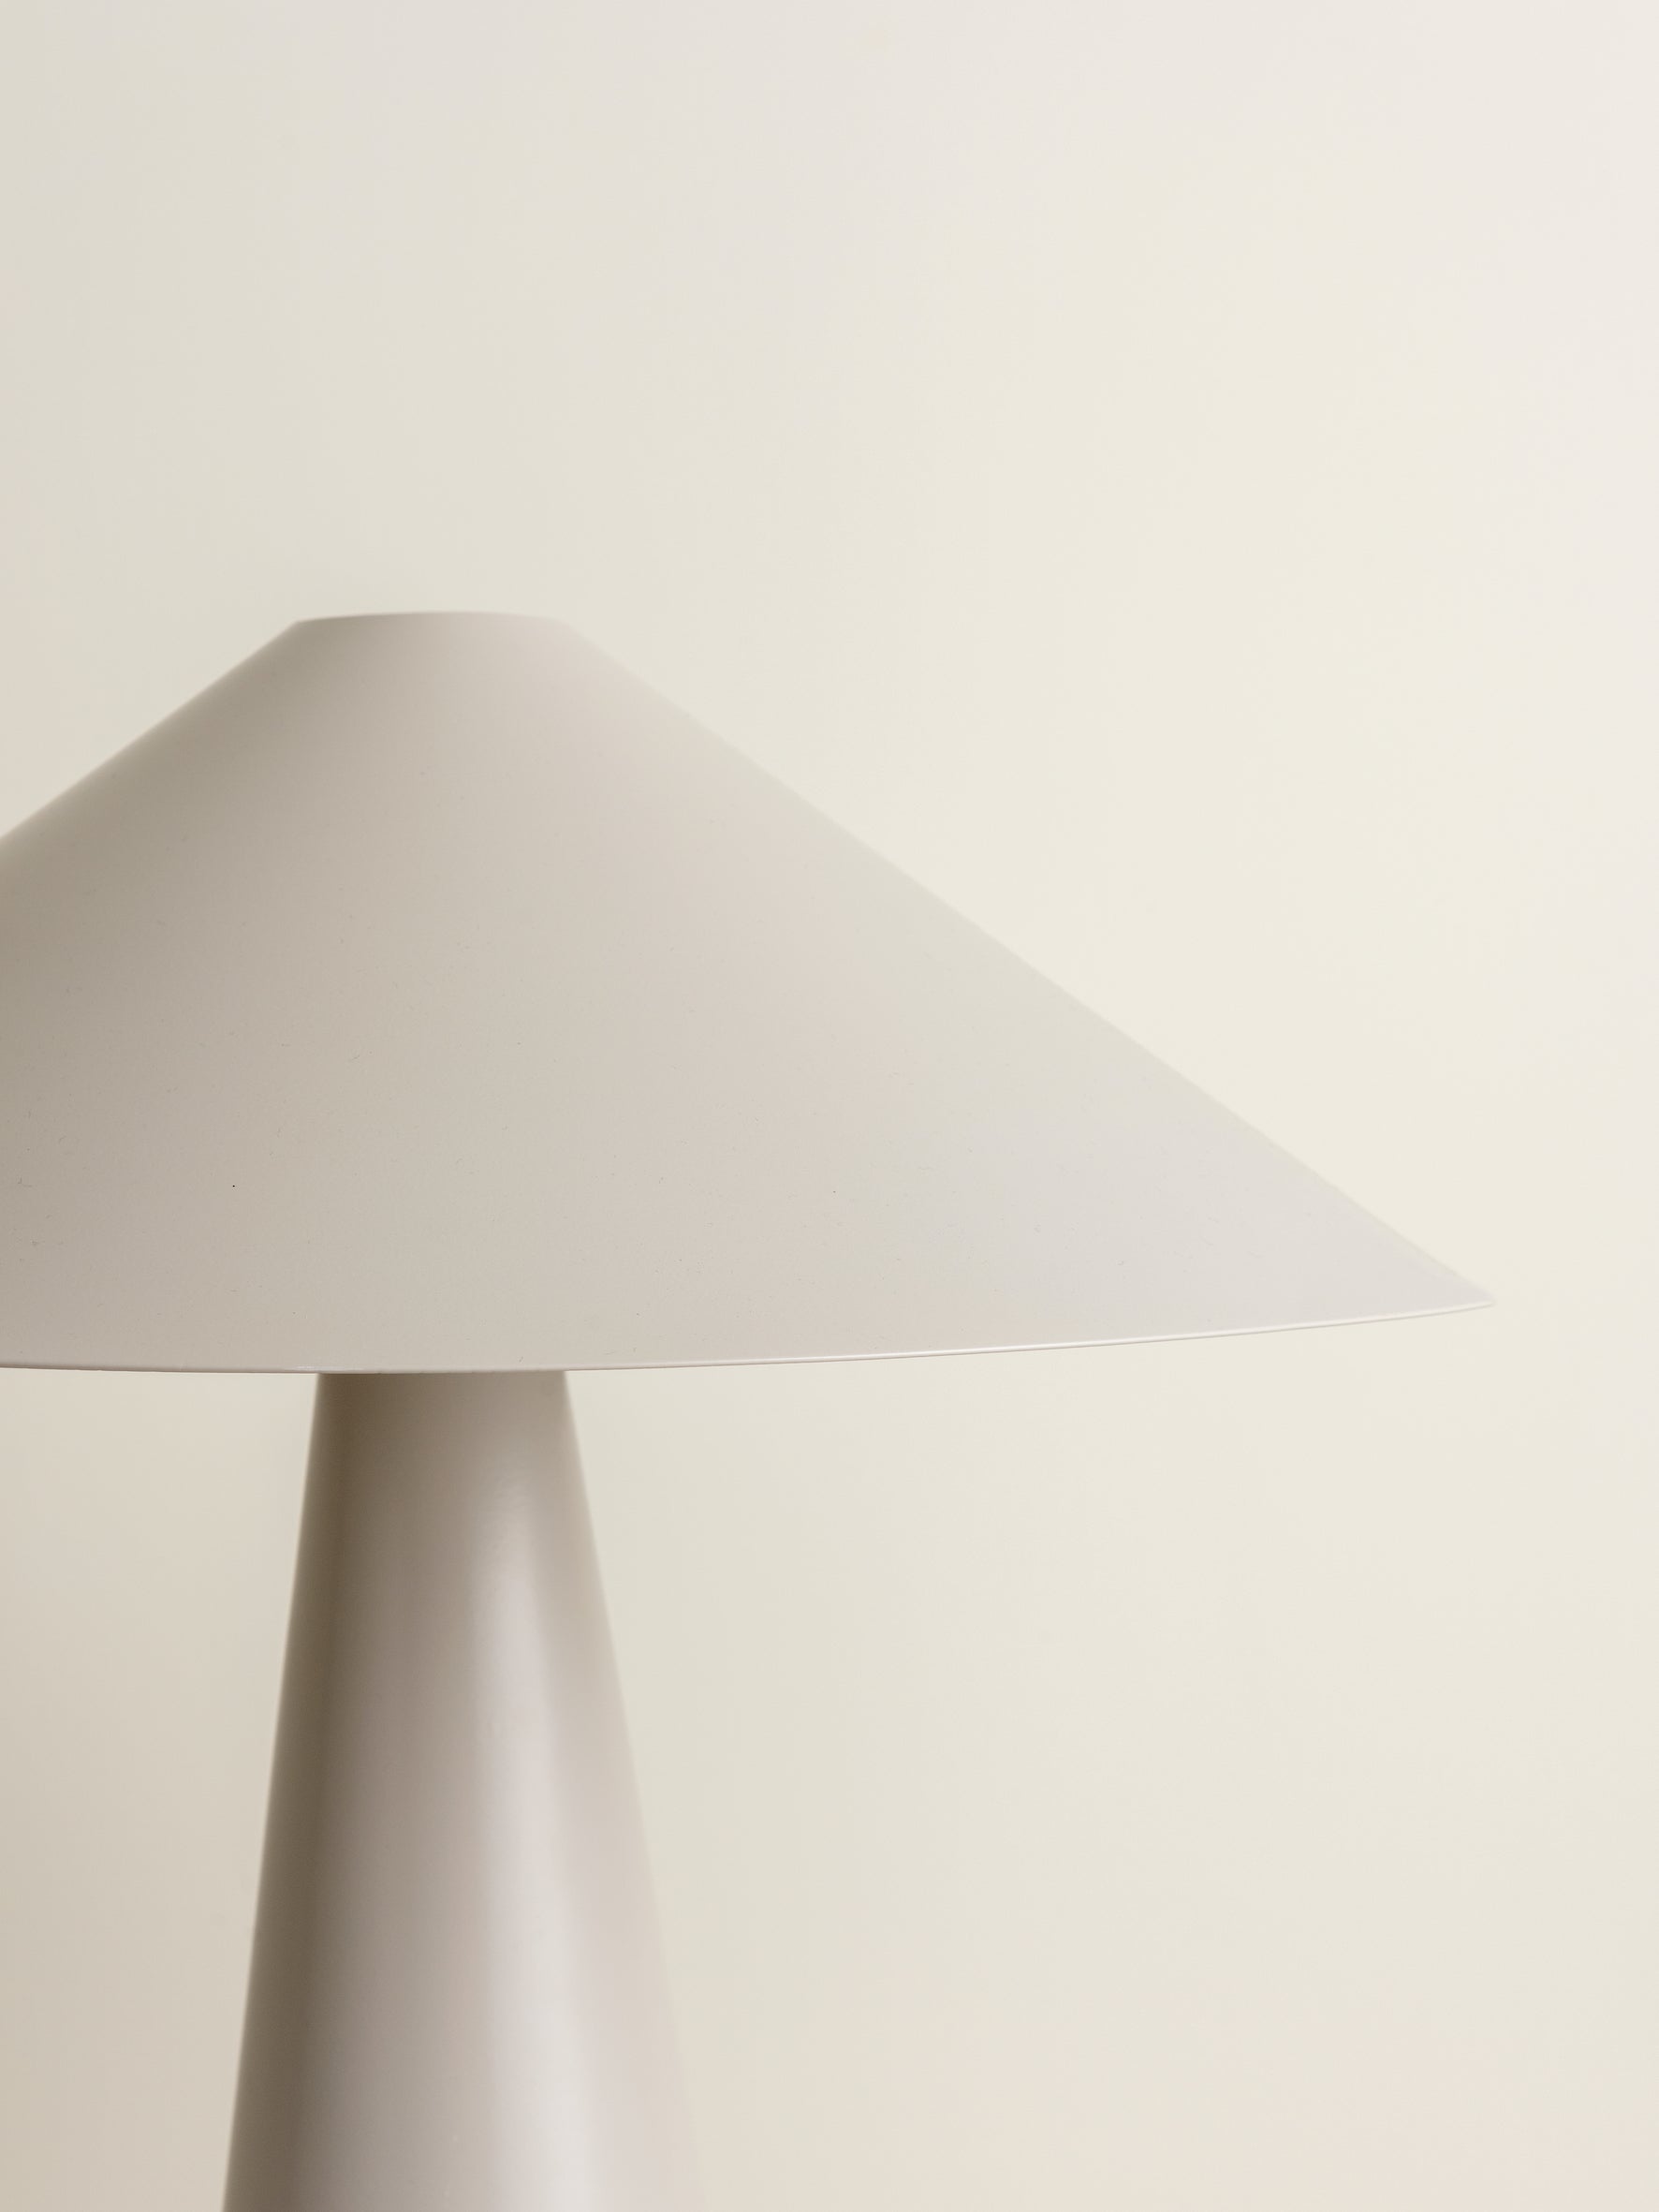 Orta - 1 light warm white cone table lamp | Table Lamp | Lights & Lamps Inc | Modern Affordable Designer Lighting | USA